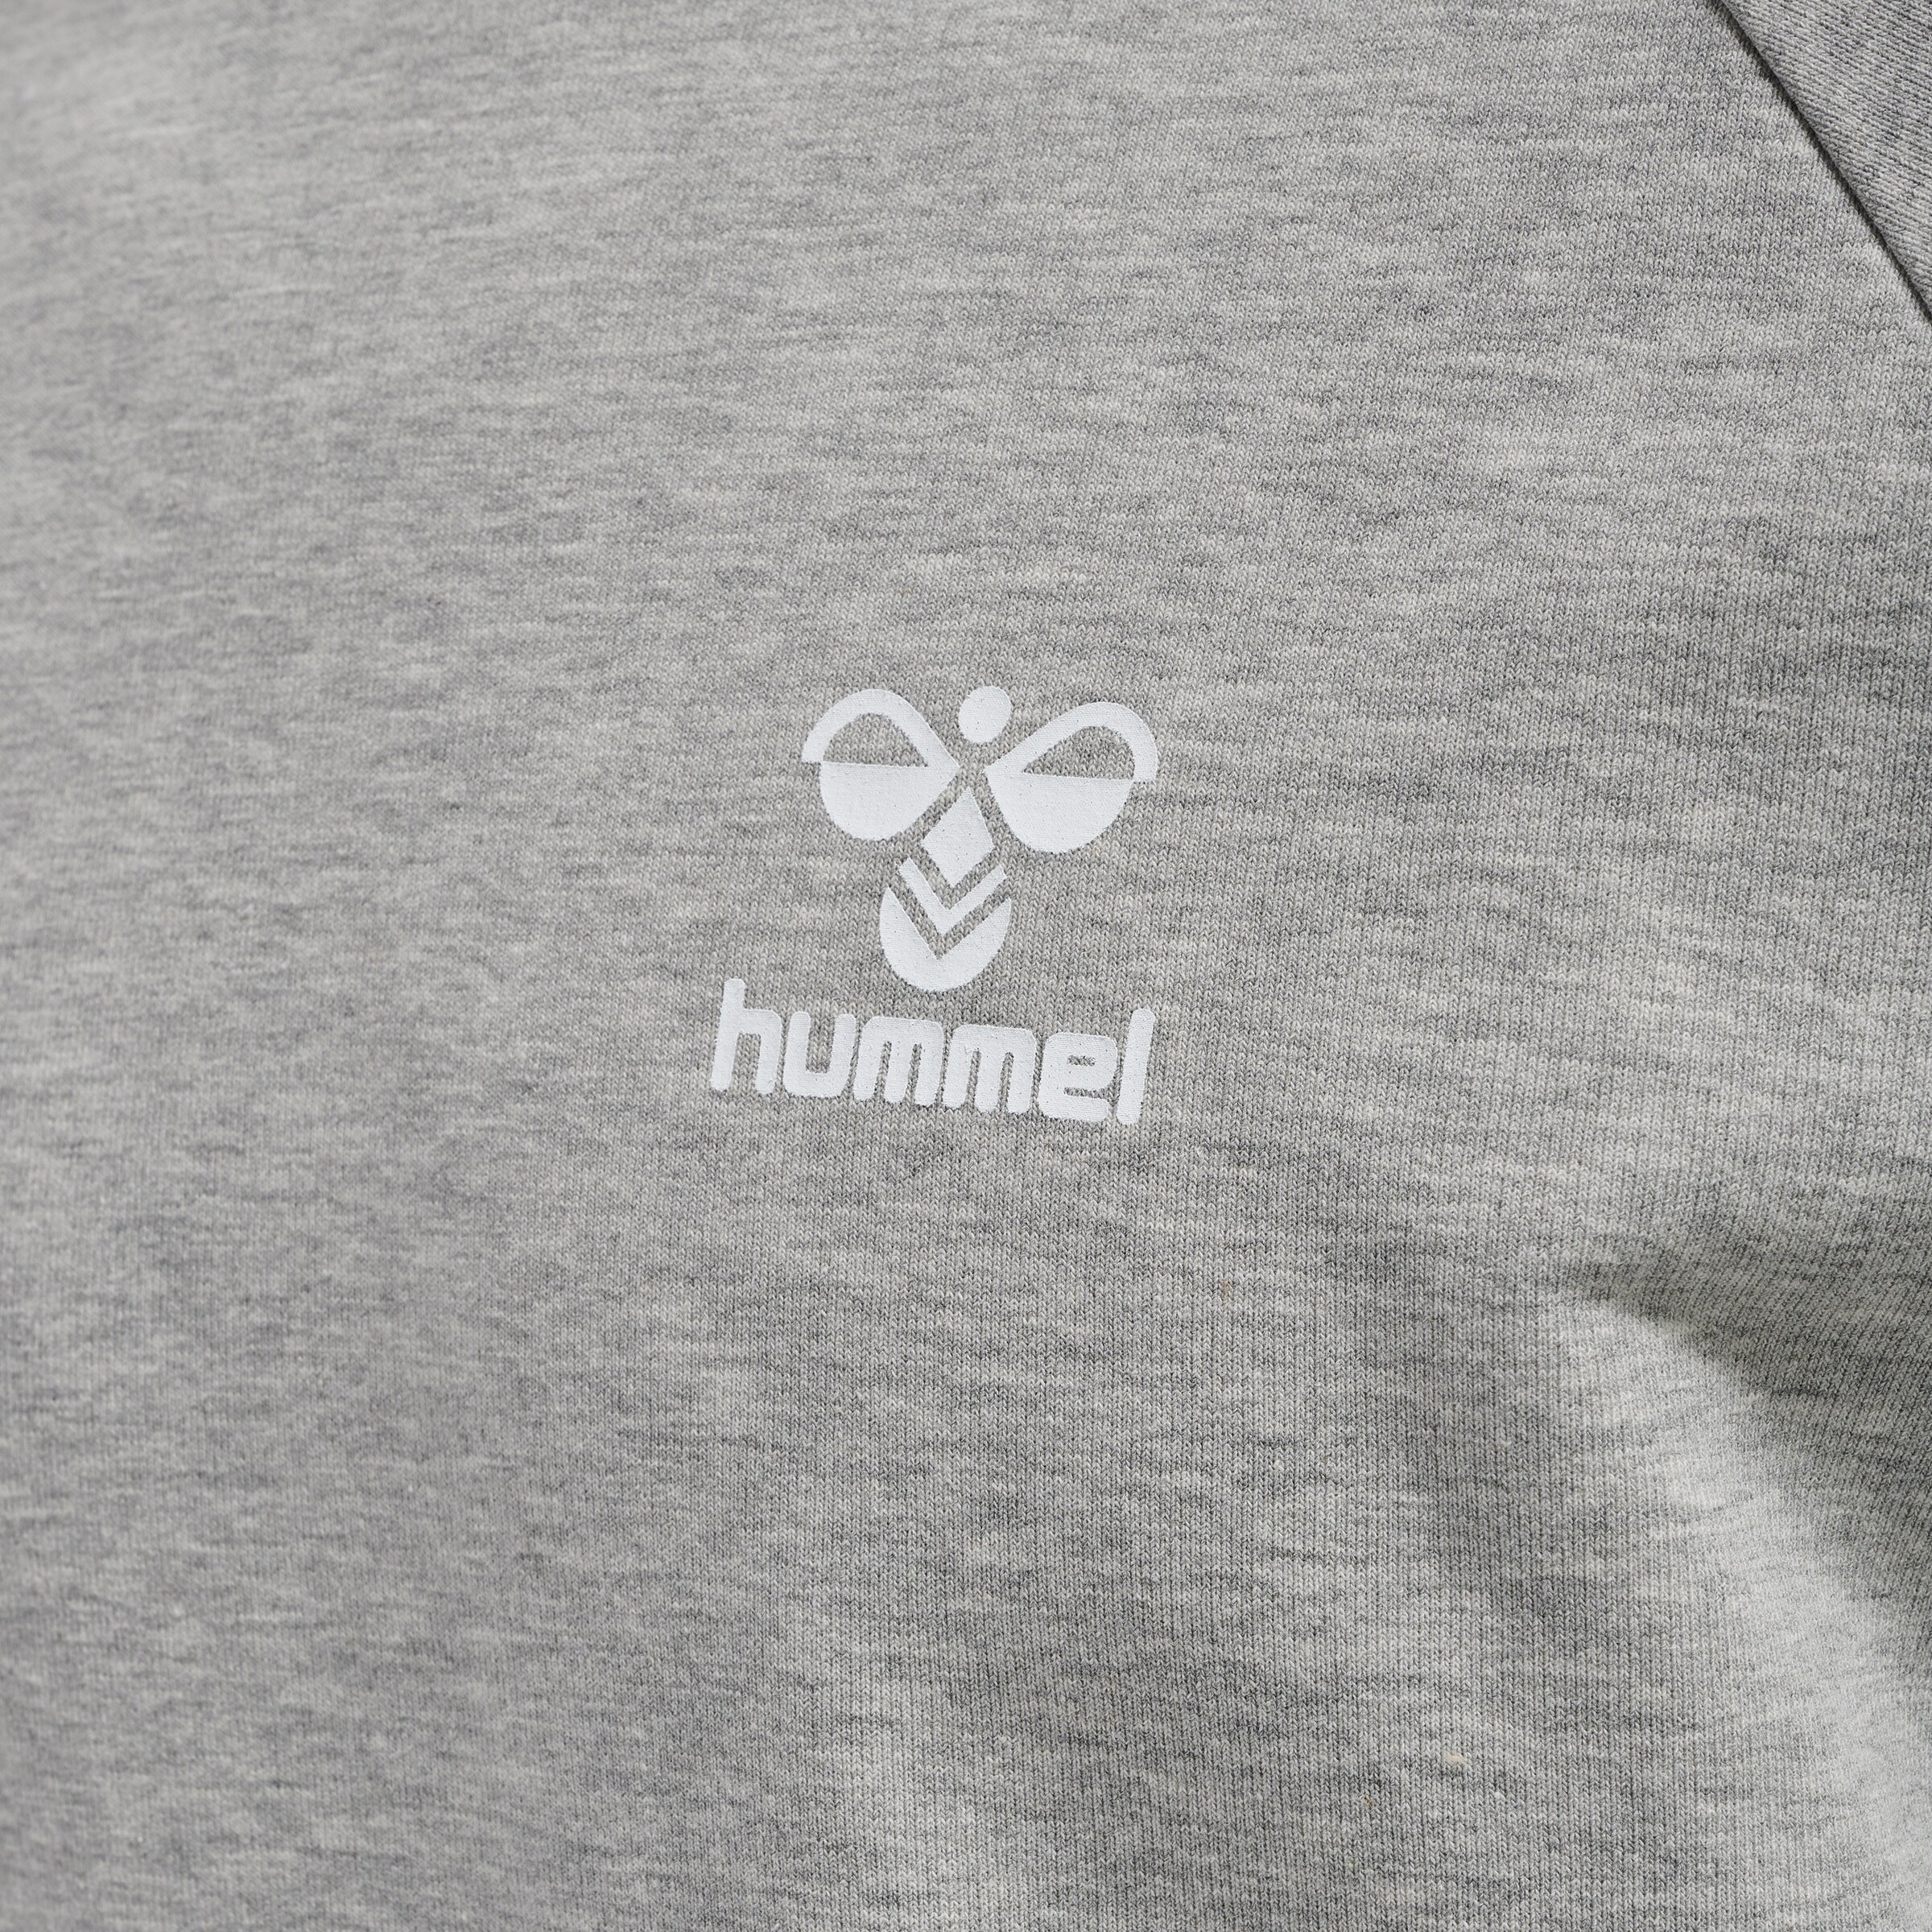 Männer Sportarten Hummel Sweatshirt in Graumeliert - WR09575